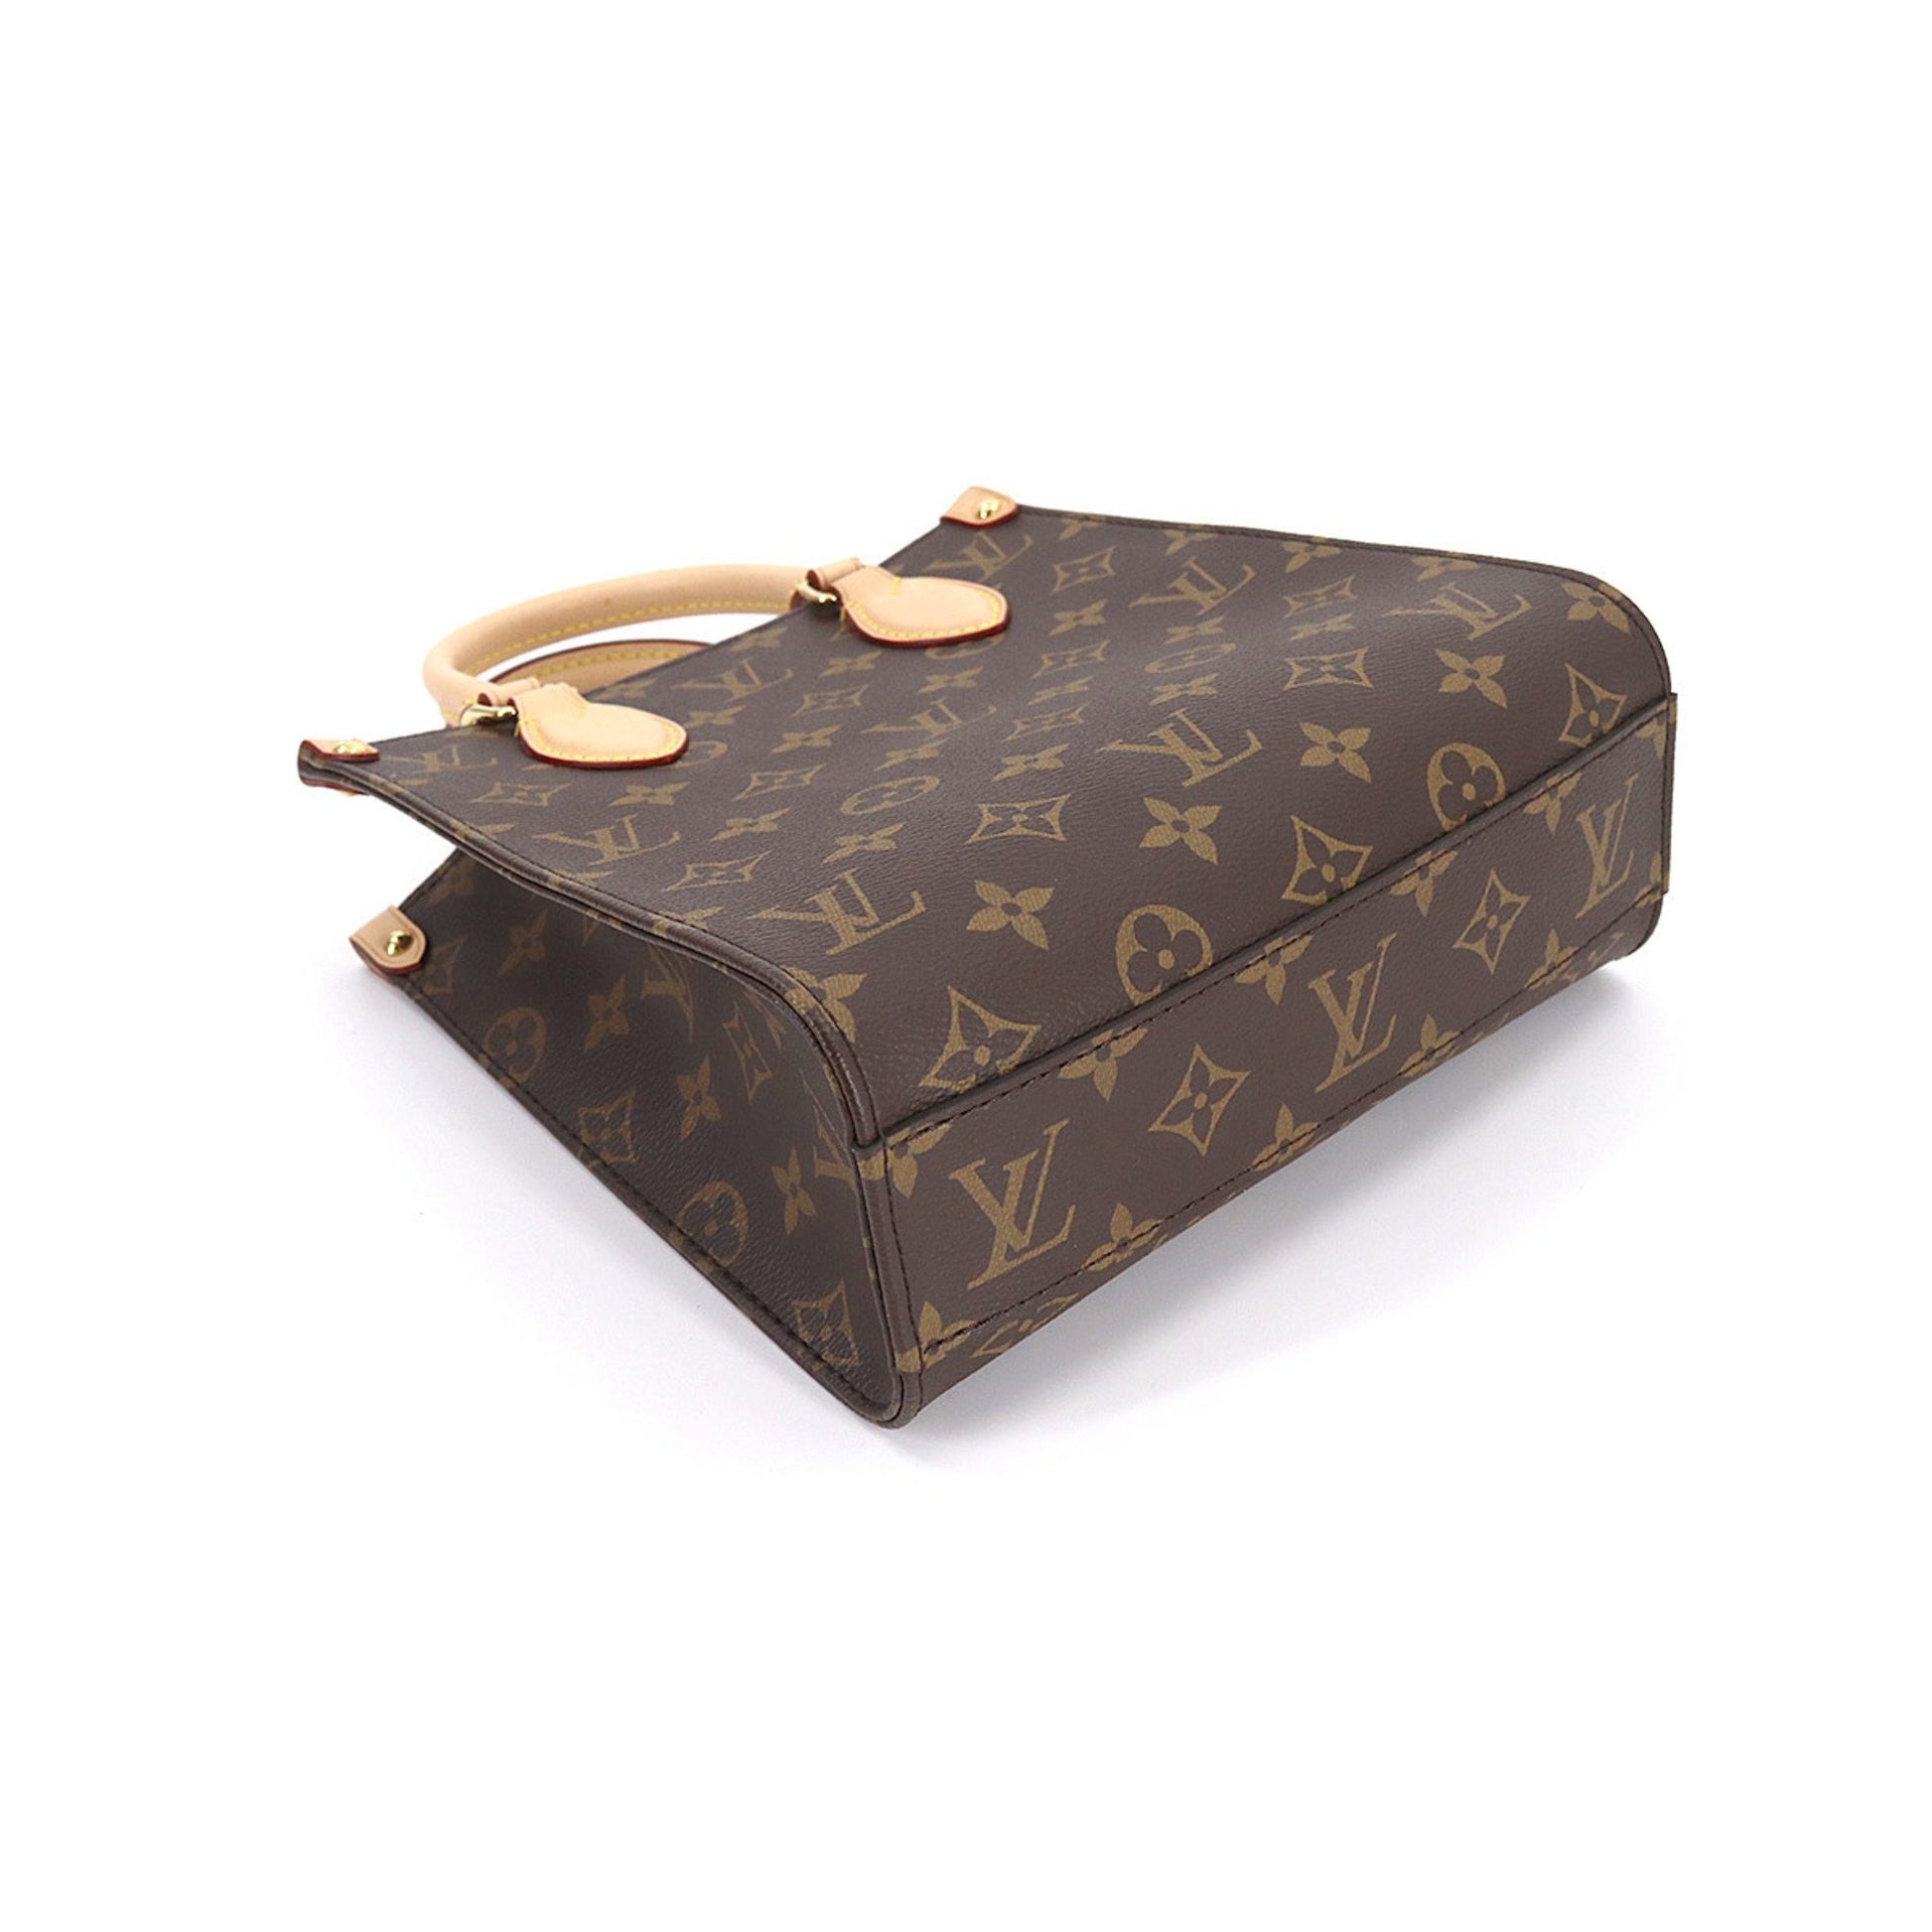 Louis Vuitton Monogram Lamb Leather Speedy BB 2way Shoulder Bag